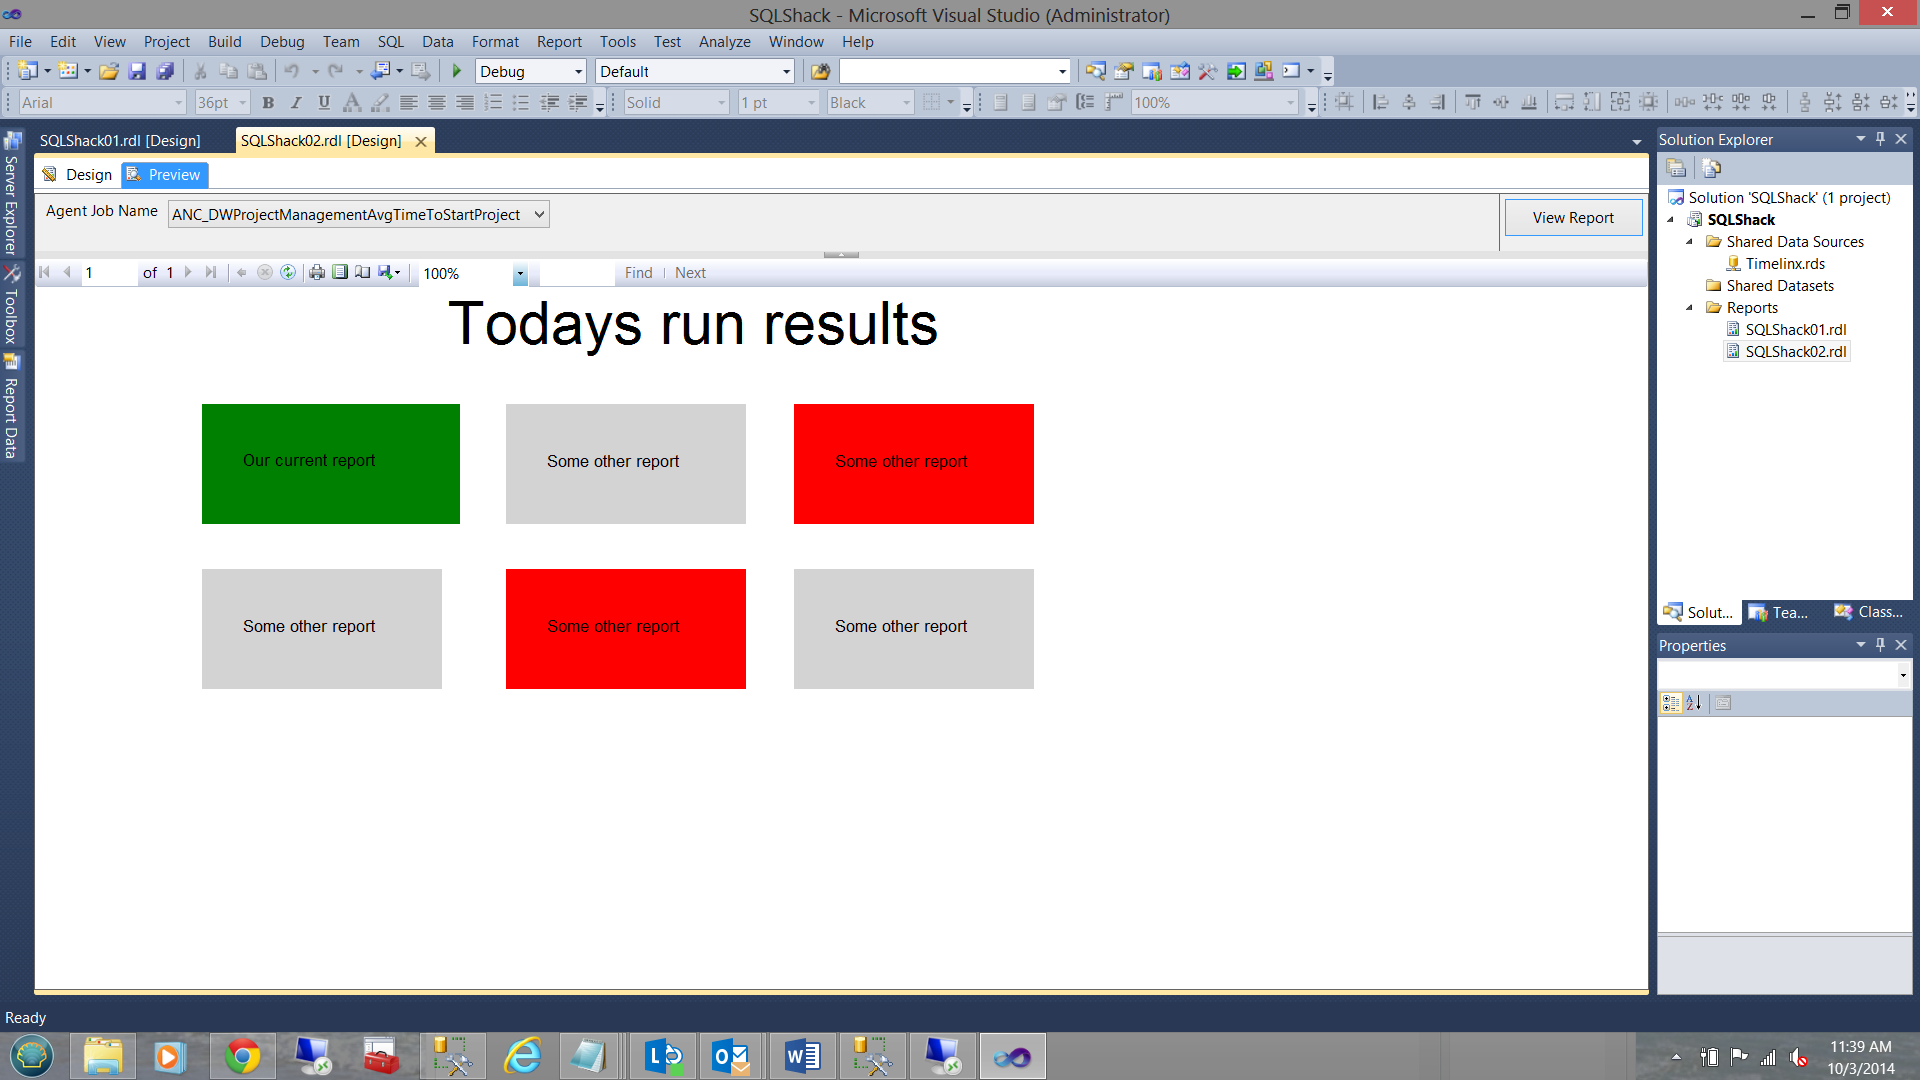 Run results screen